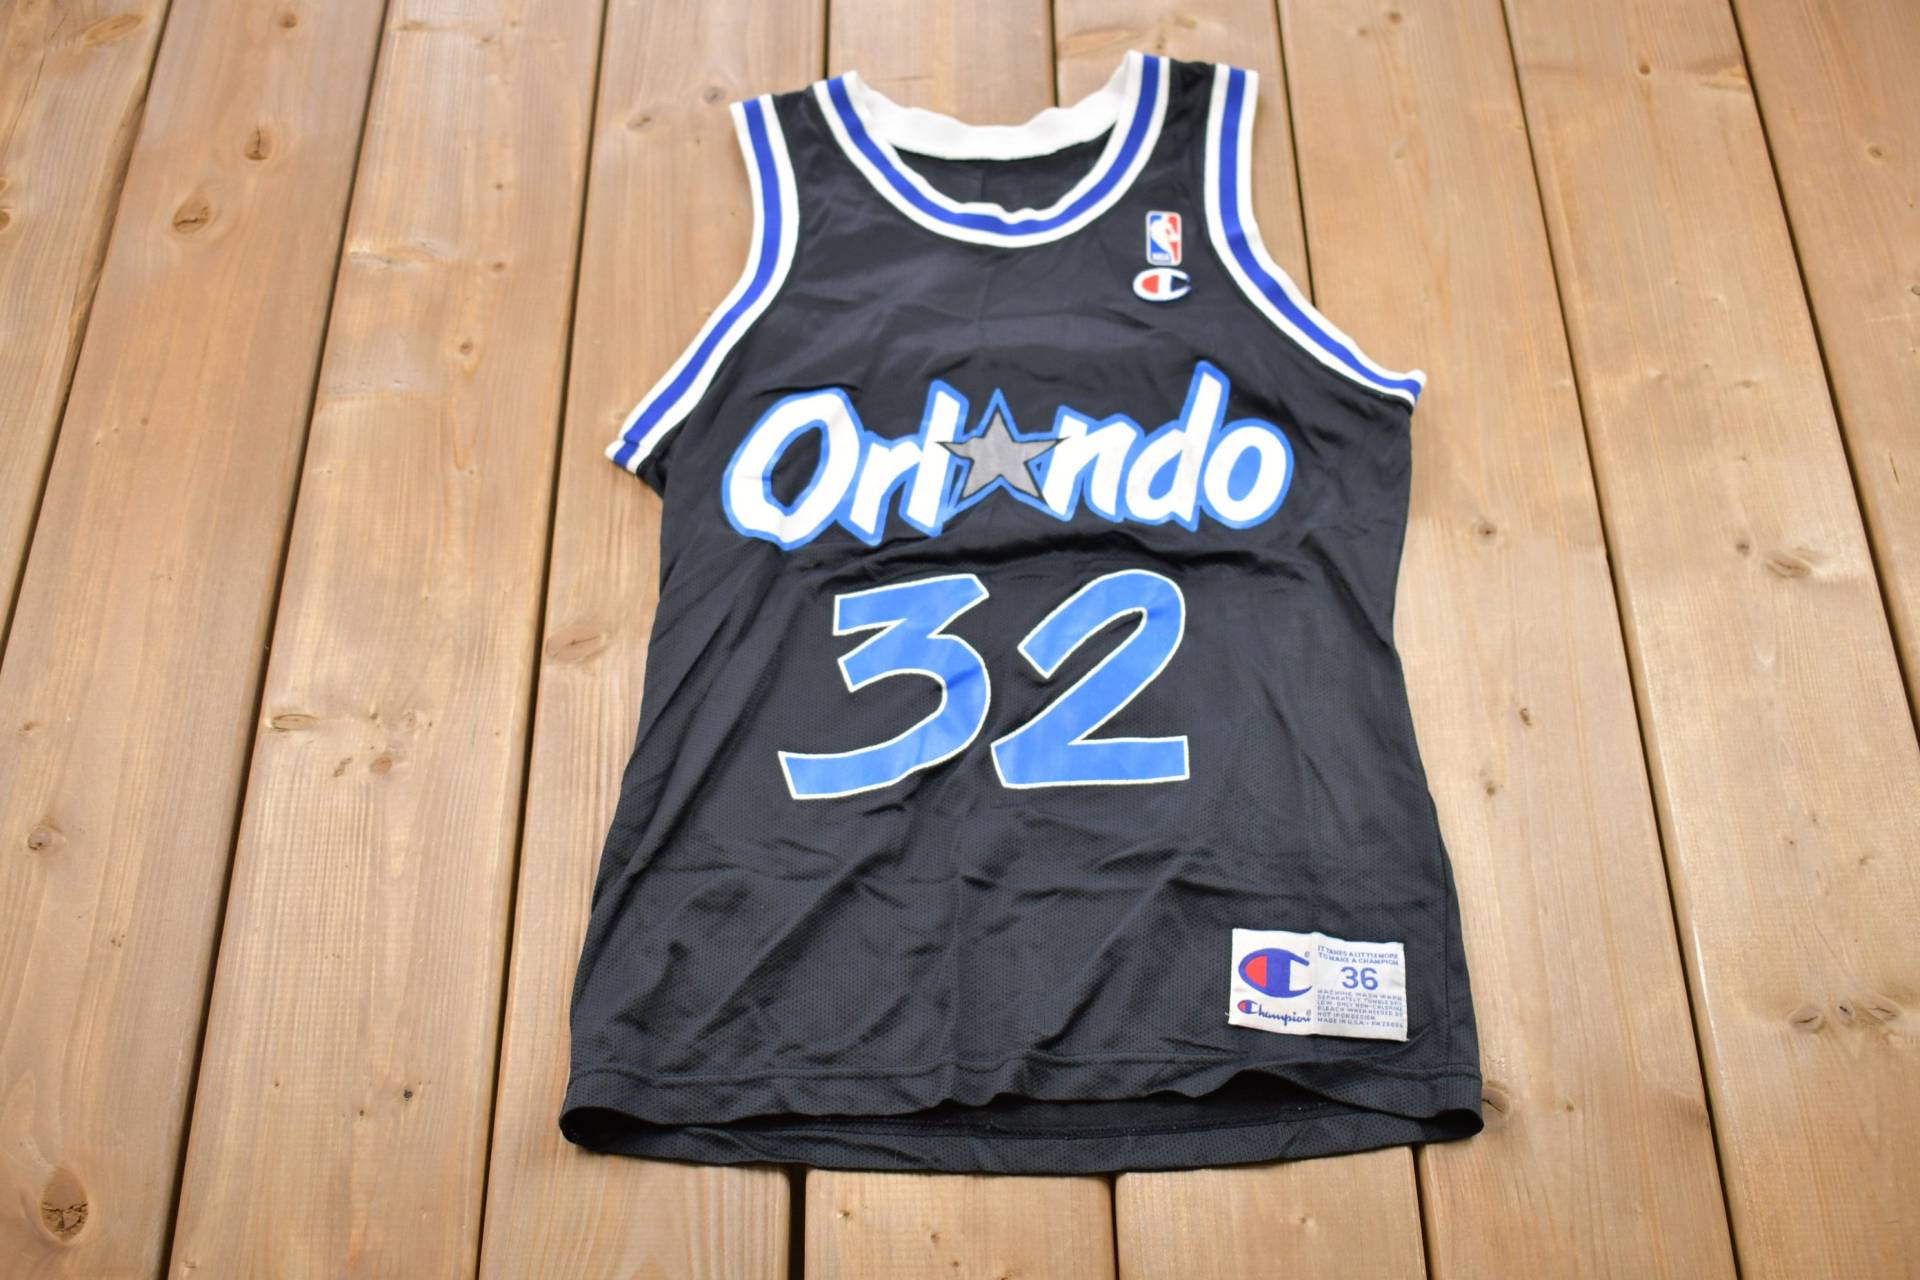 Vintage 1990Er Jahre Orlando Magic Shaquille O'neal Nba Champion Basketball Jersey/Grafik 80Er 90Er Streetwear Retro Style Made in Usa von Lostboysvintage